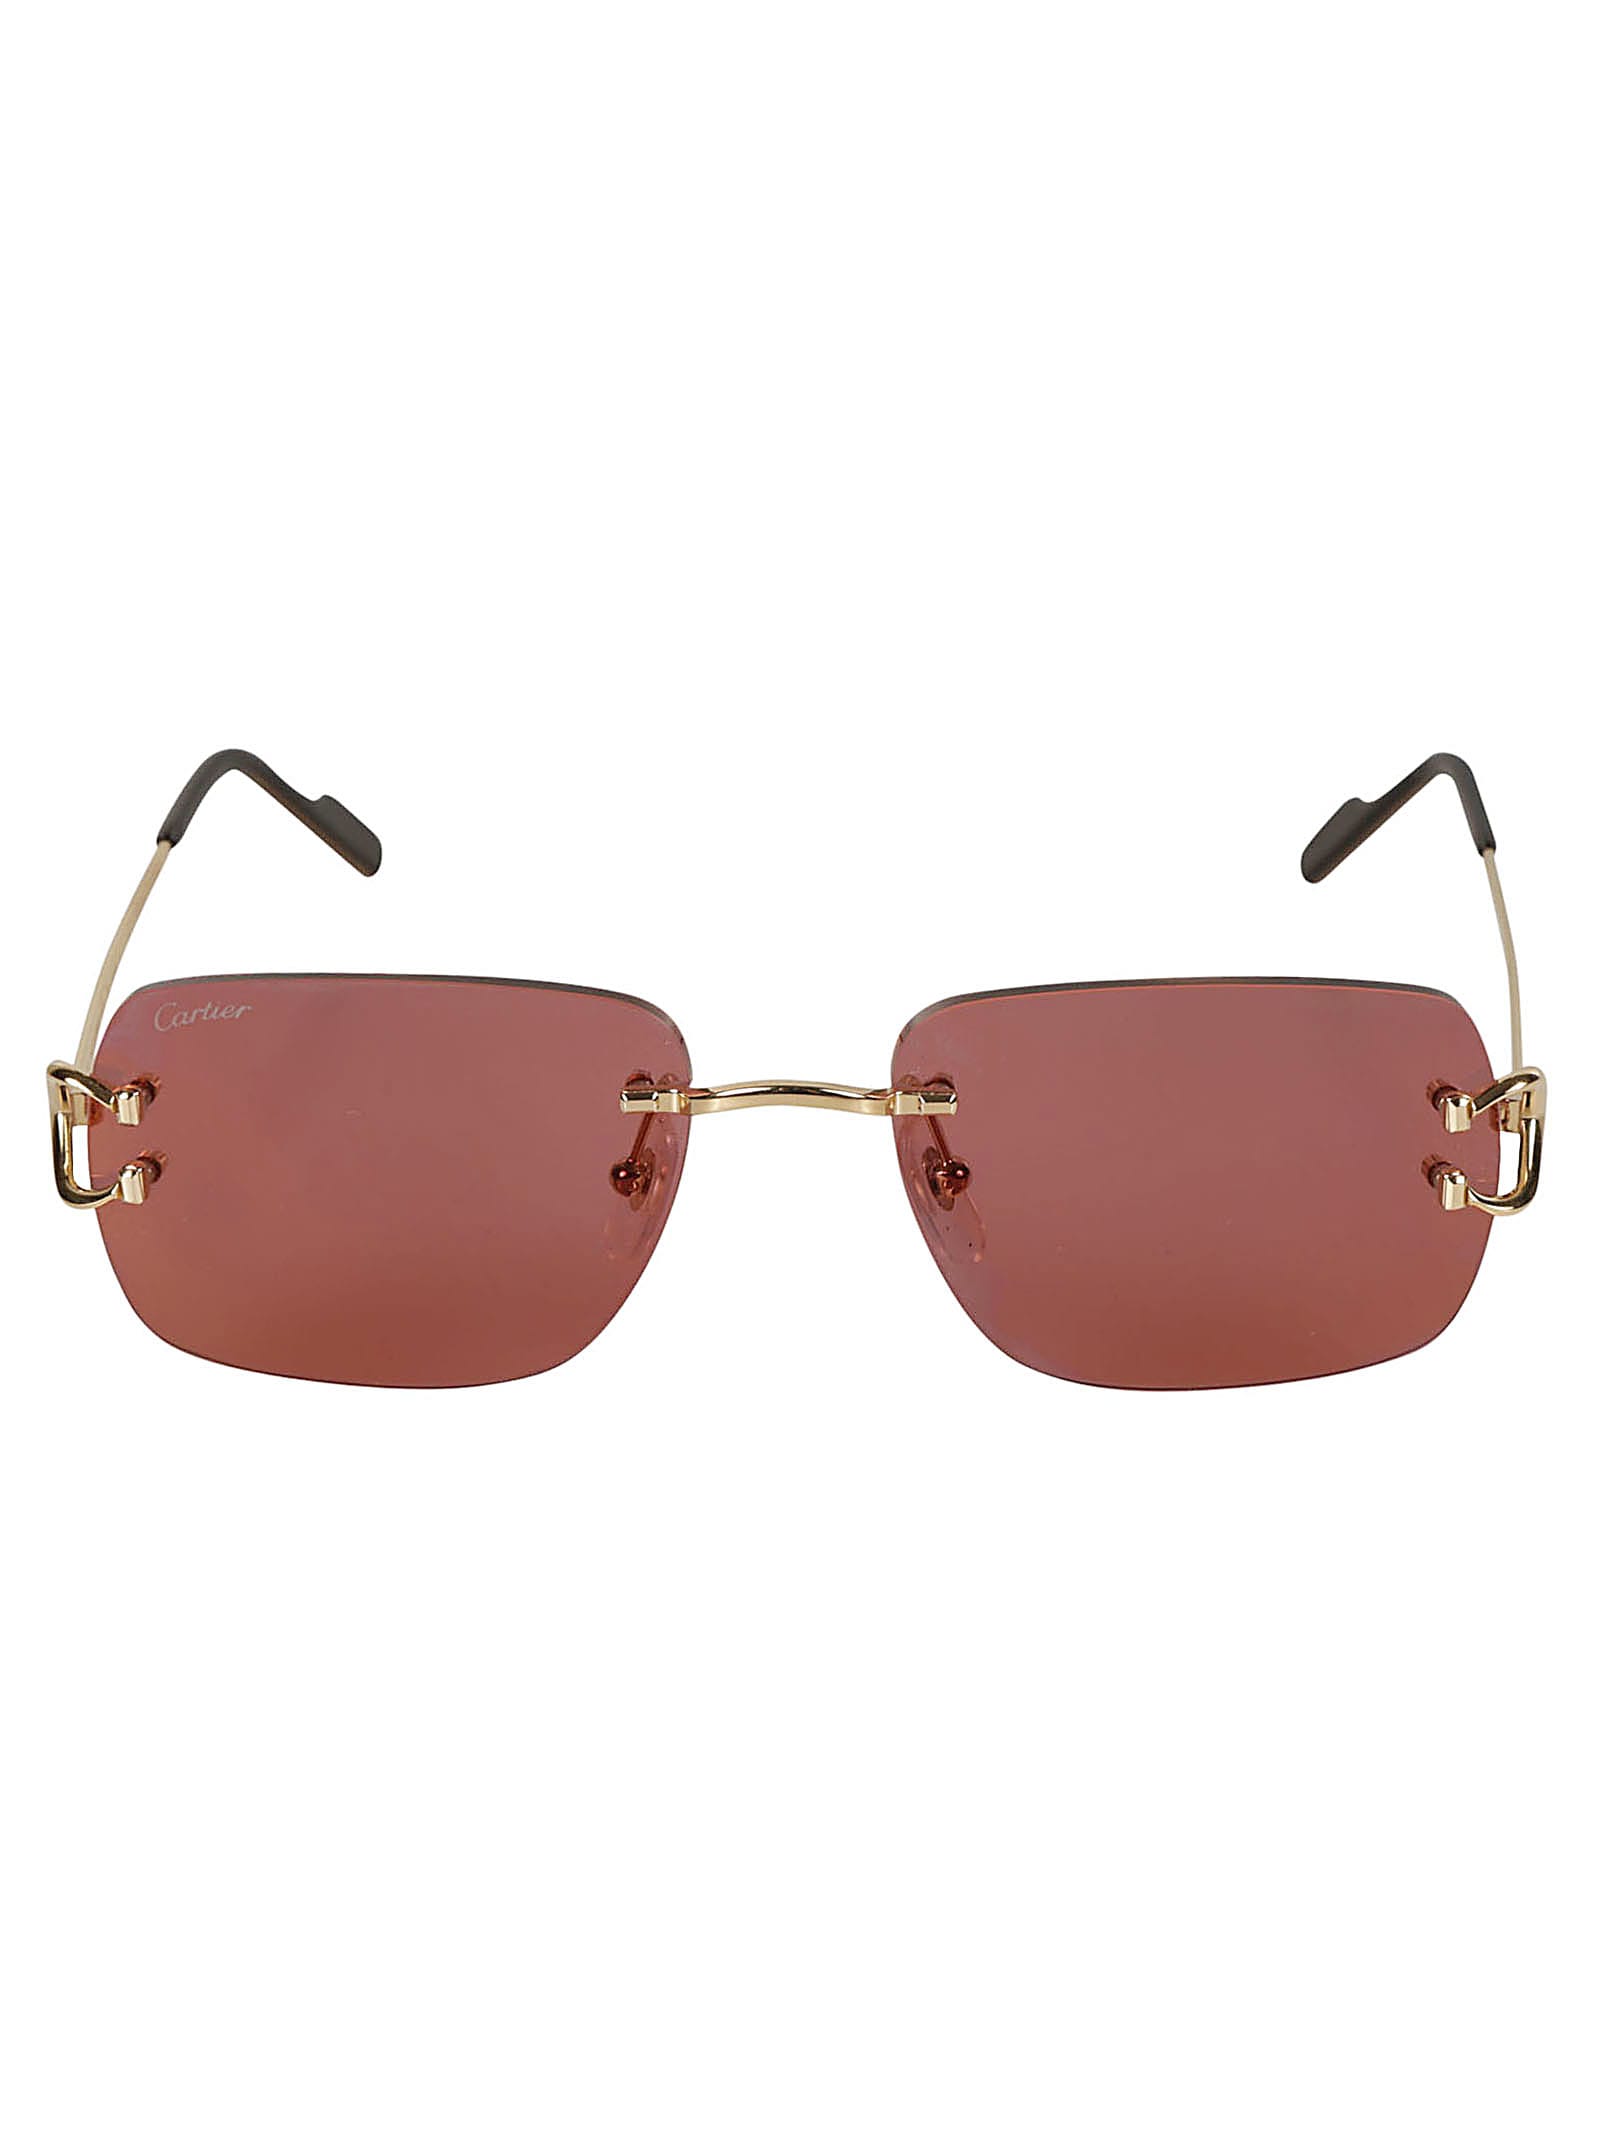 Cartier Rectangular Sunglasses Sunglasses In Gold/red